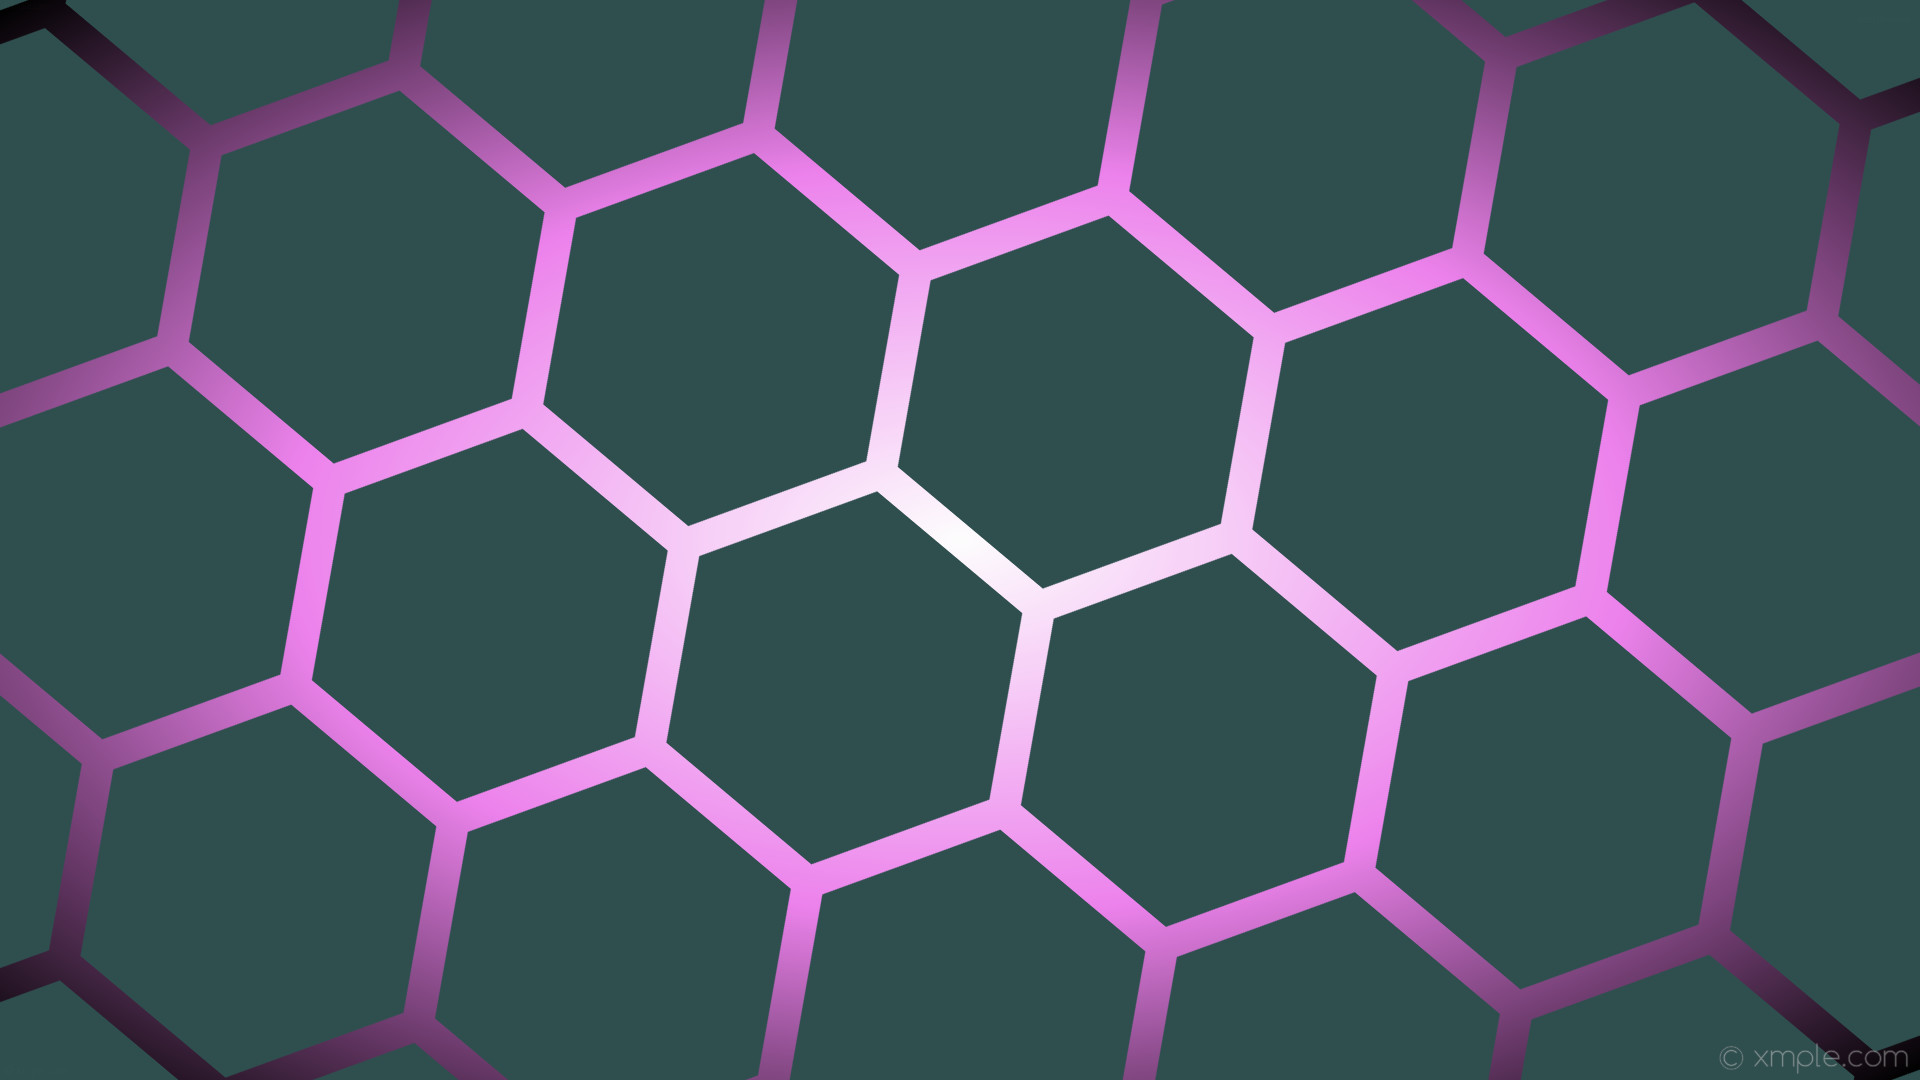 1920x1080 wallpaper purple glow grey hexagon gradient white black dark slate gray  violet #2f4f4f #ffffff